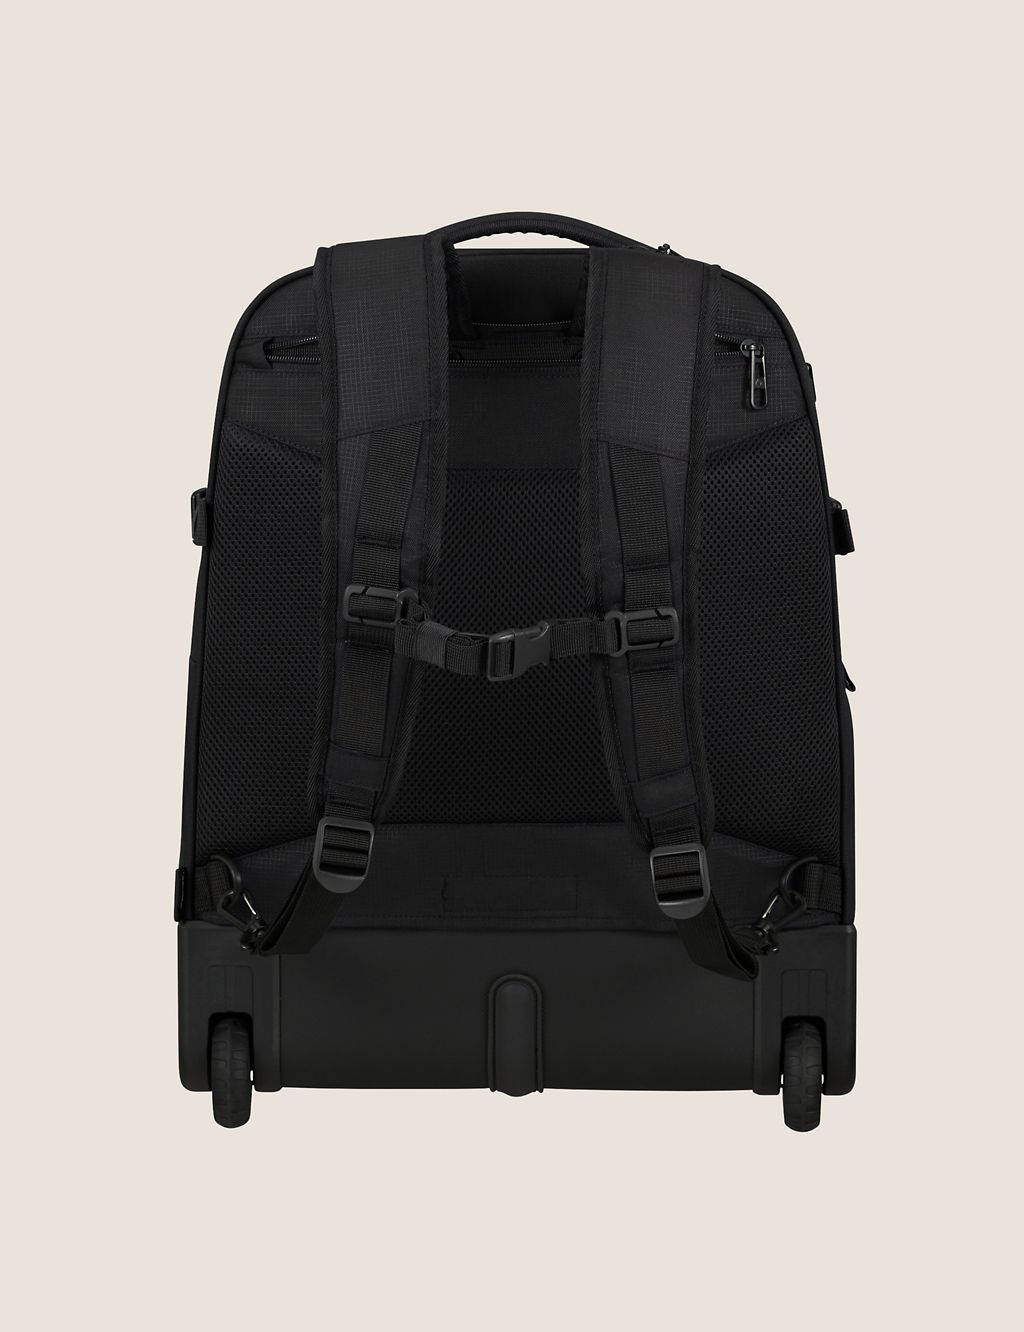 Roader 2 Wheel Laptop Backpack Suitcase 1 of 3